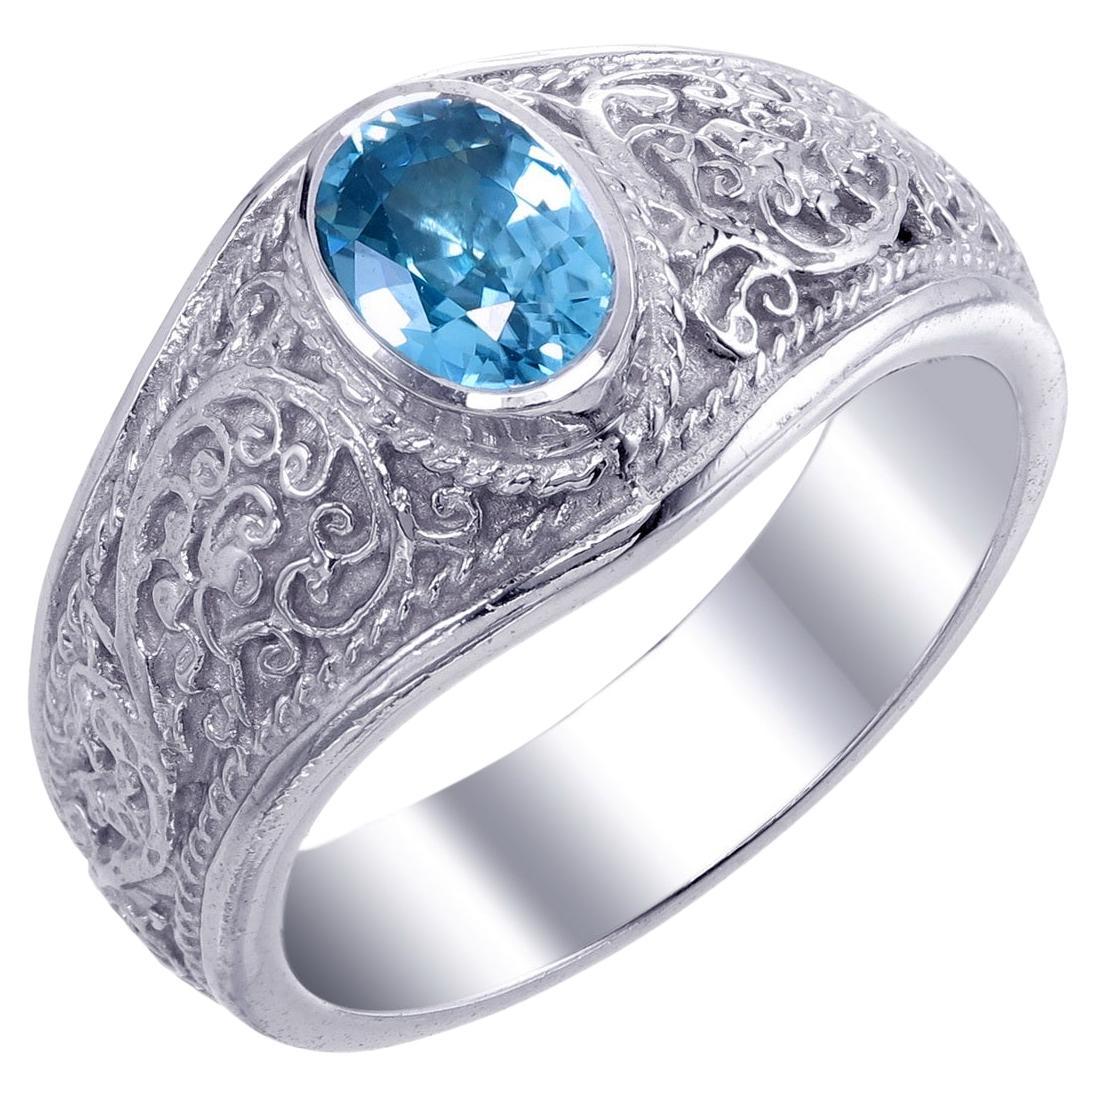 Orloff of Denmark, 1.35 ct Sky Blue Zircon Ring in 925 Sterling Silver